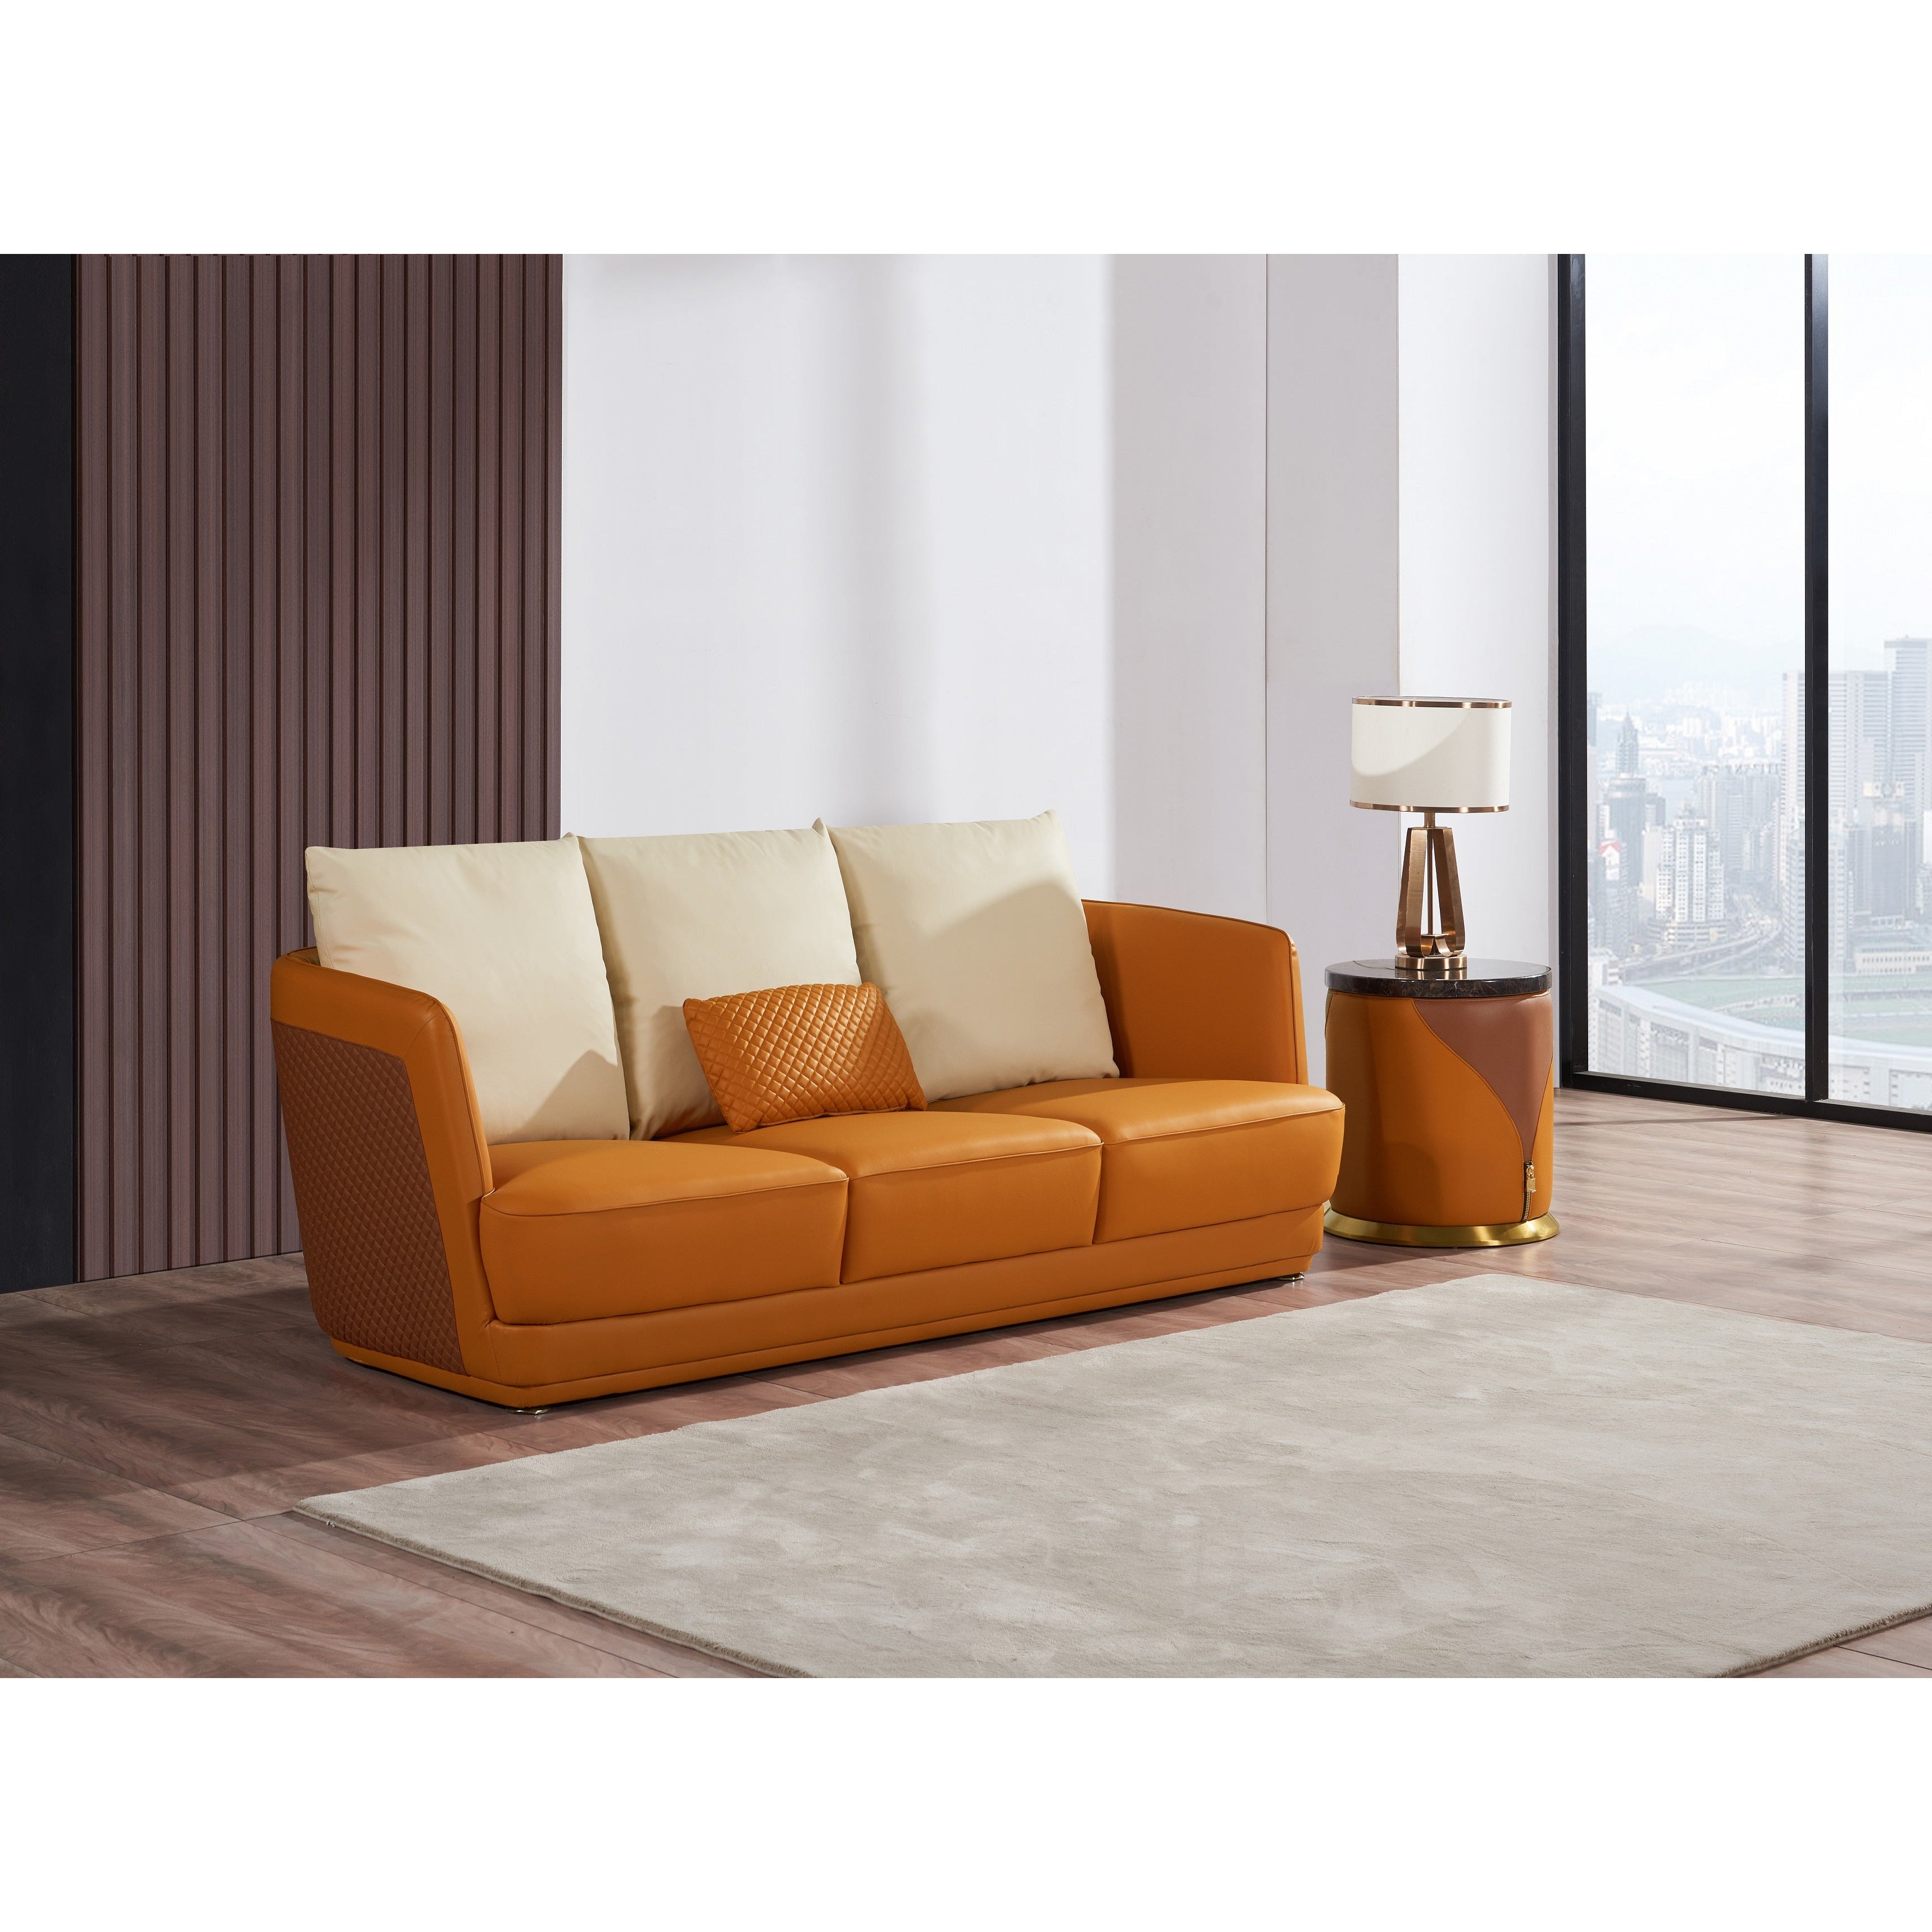 European Furniture - Glamour 3 Piece Sofa Set Orange & Brown Italian Leather - EF-51619 - New Star Living